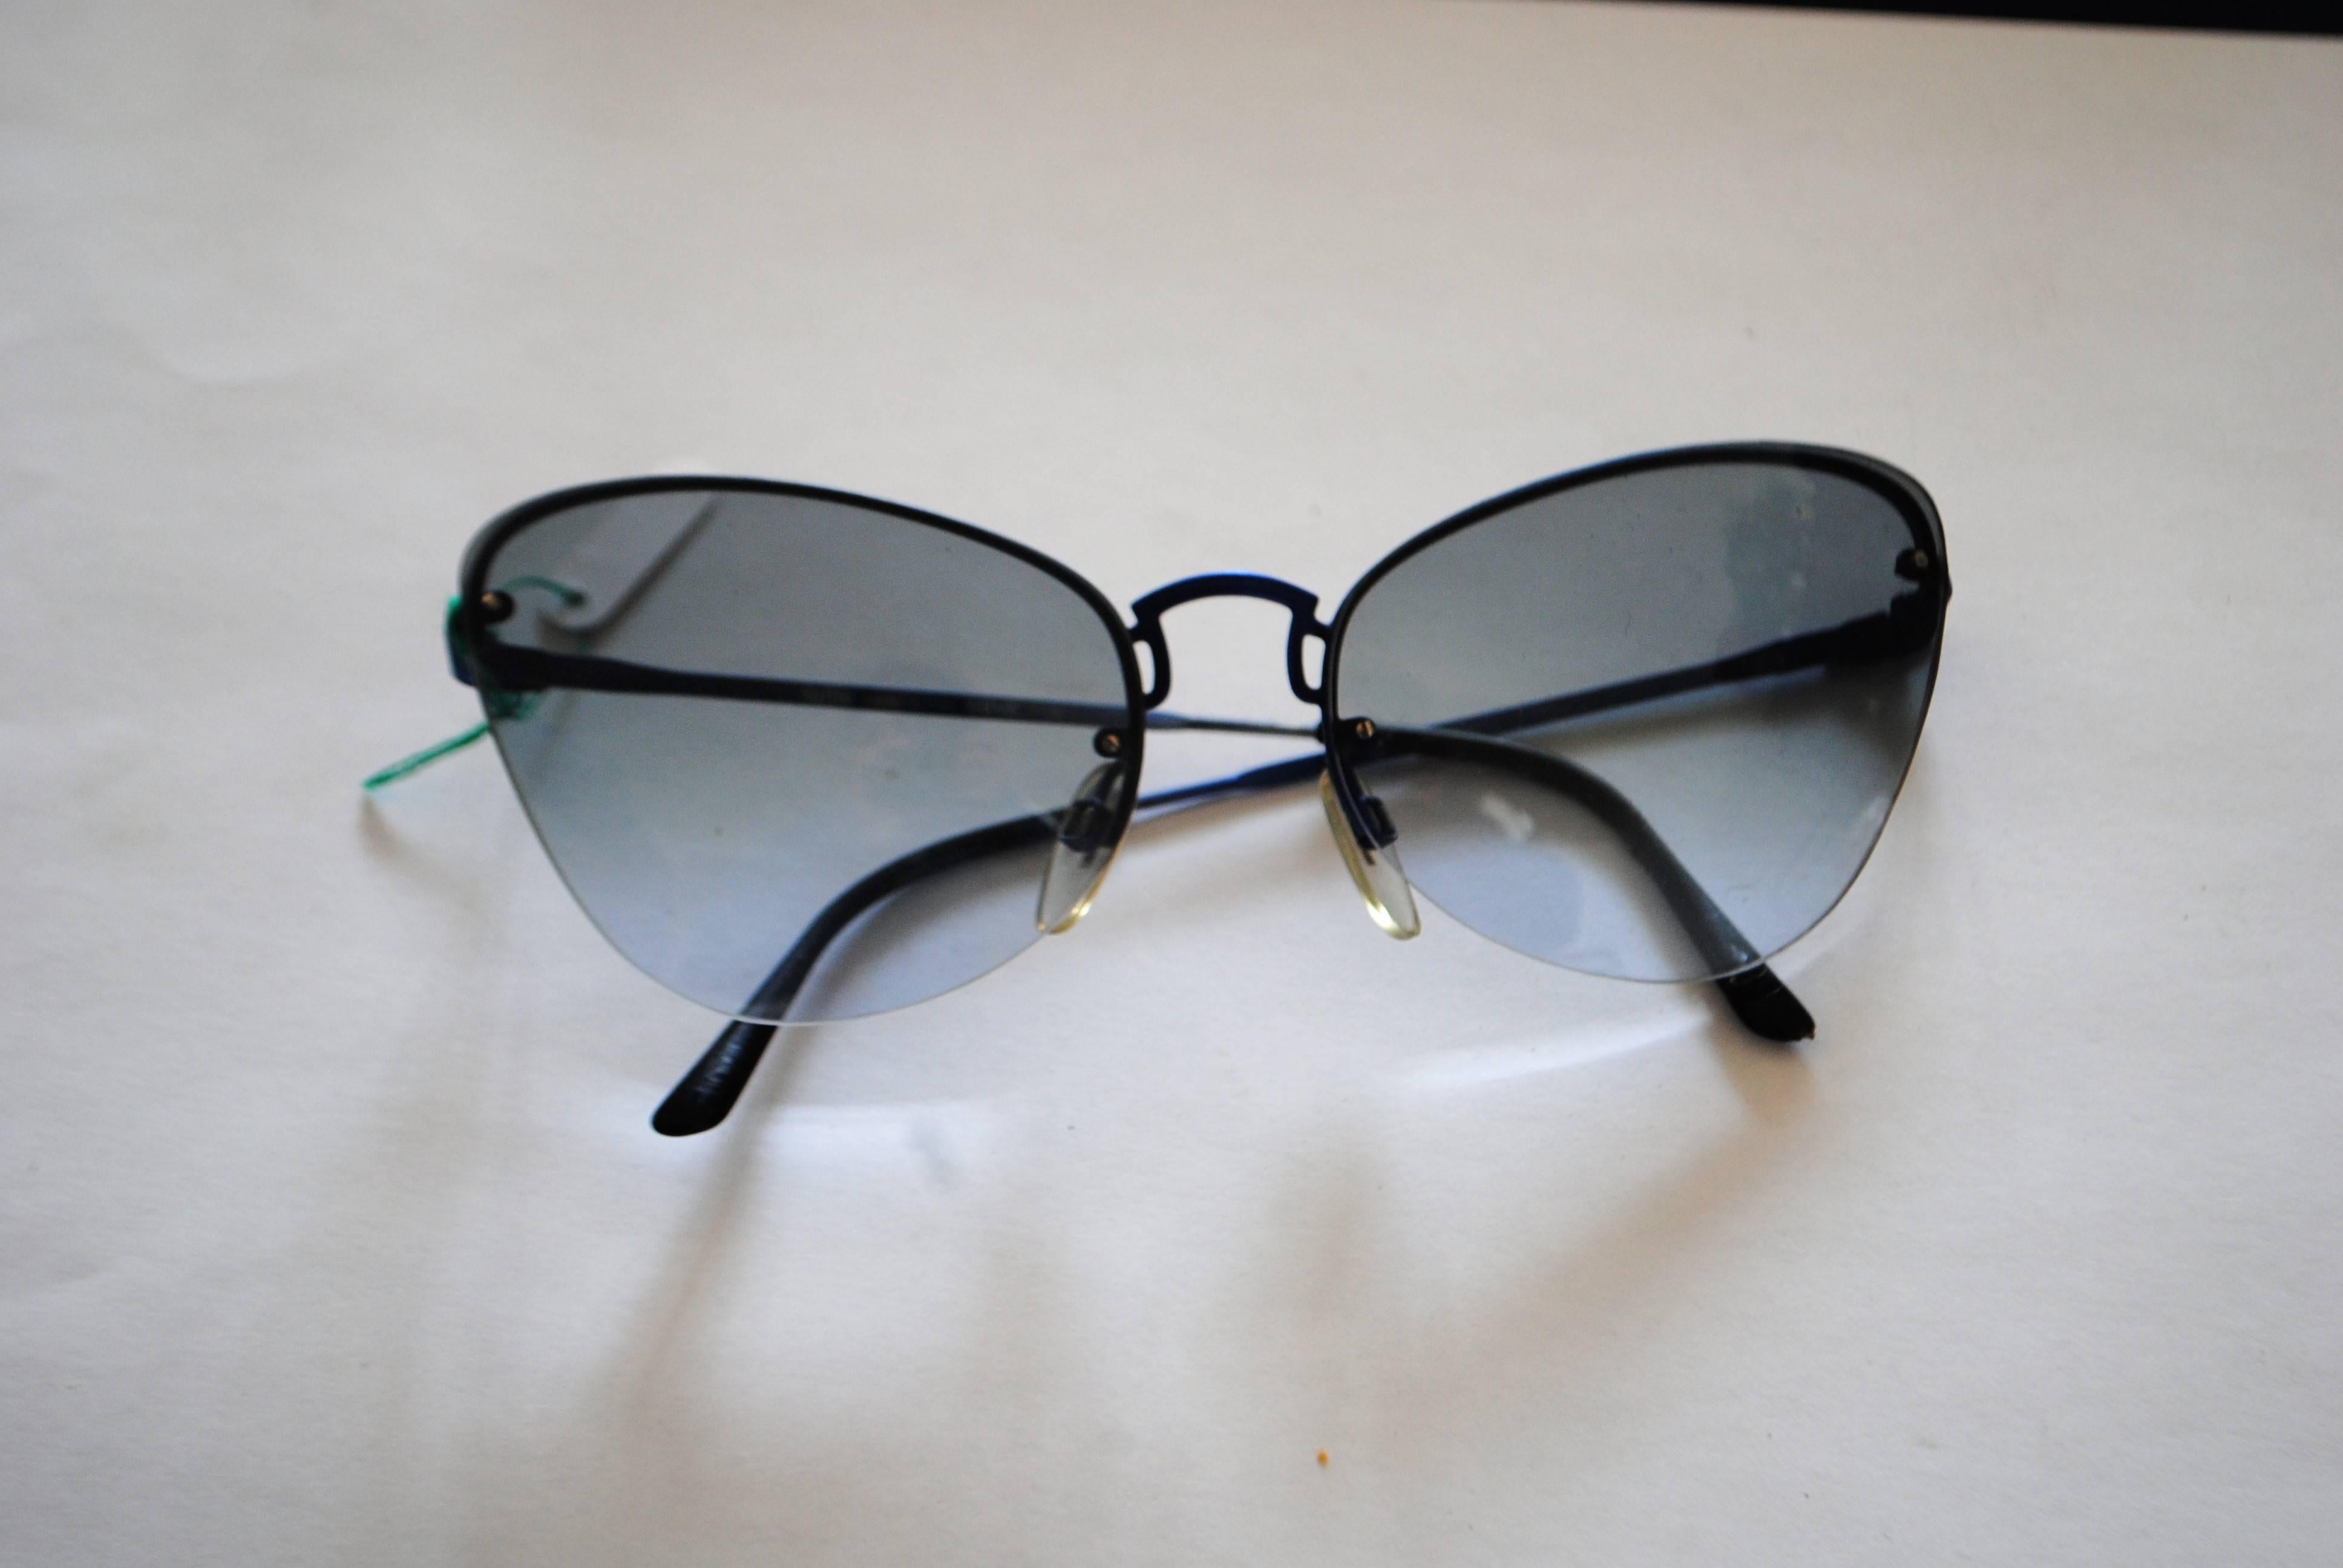 1990s Safilo Lightblu see through Sunglasses
Totally made in italy